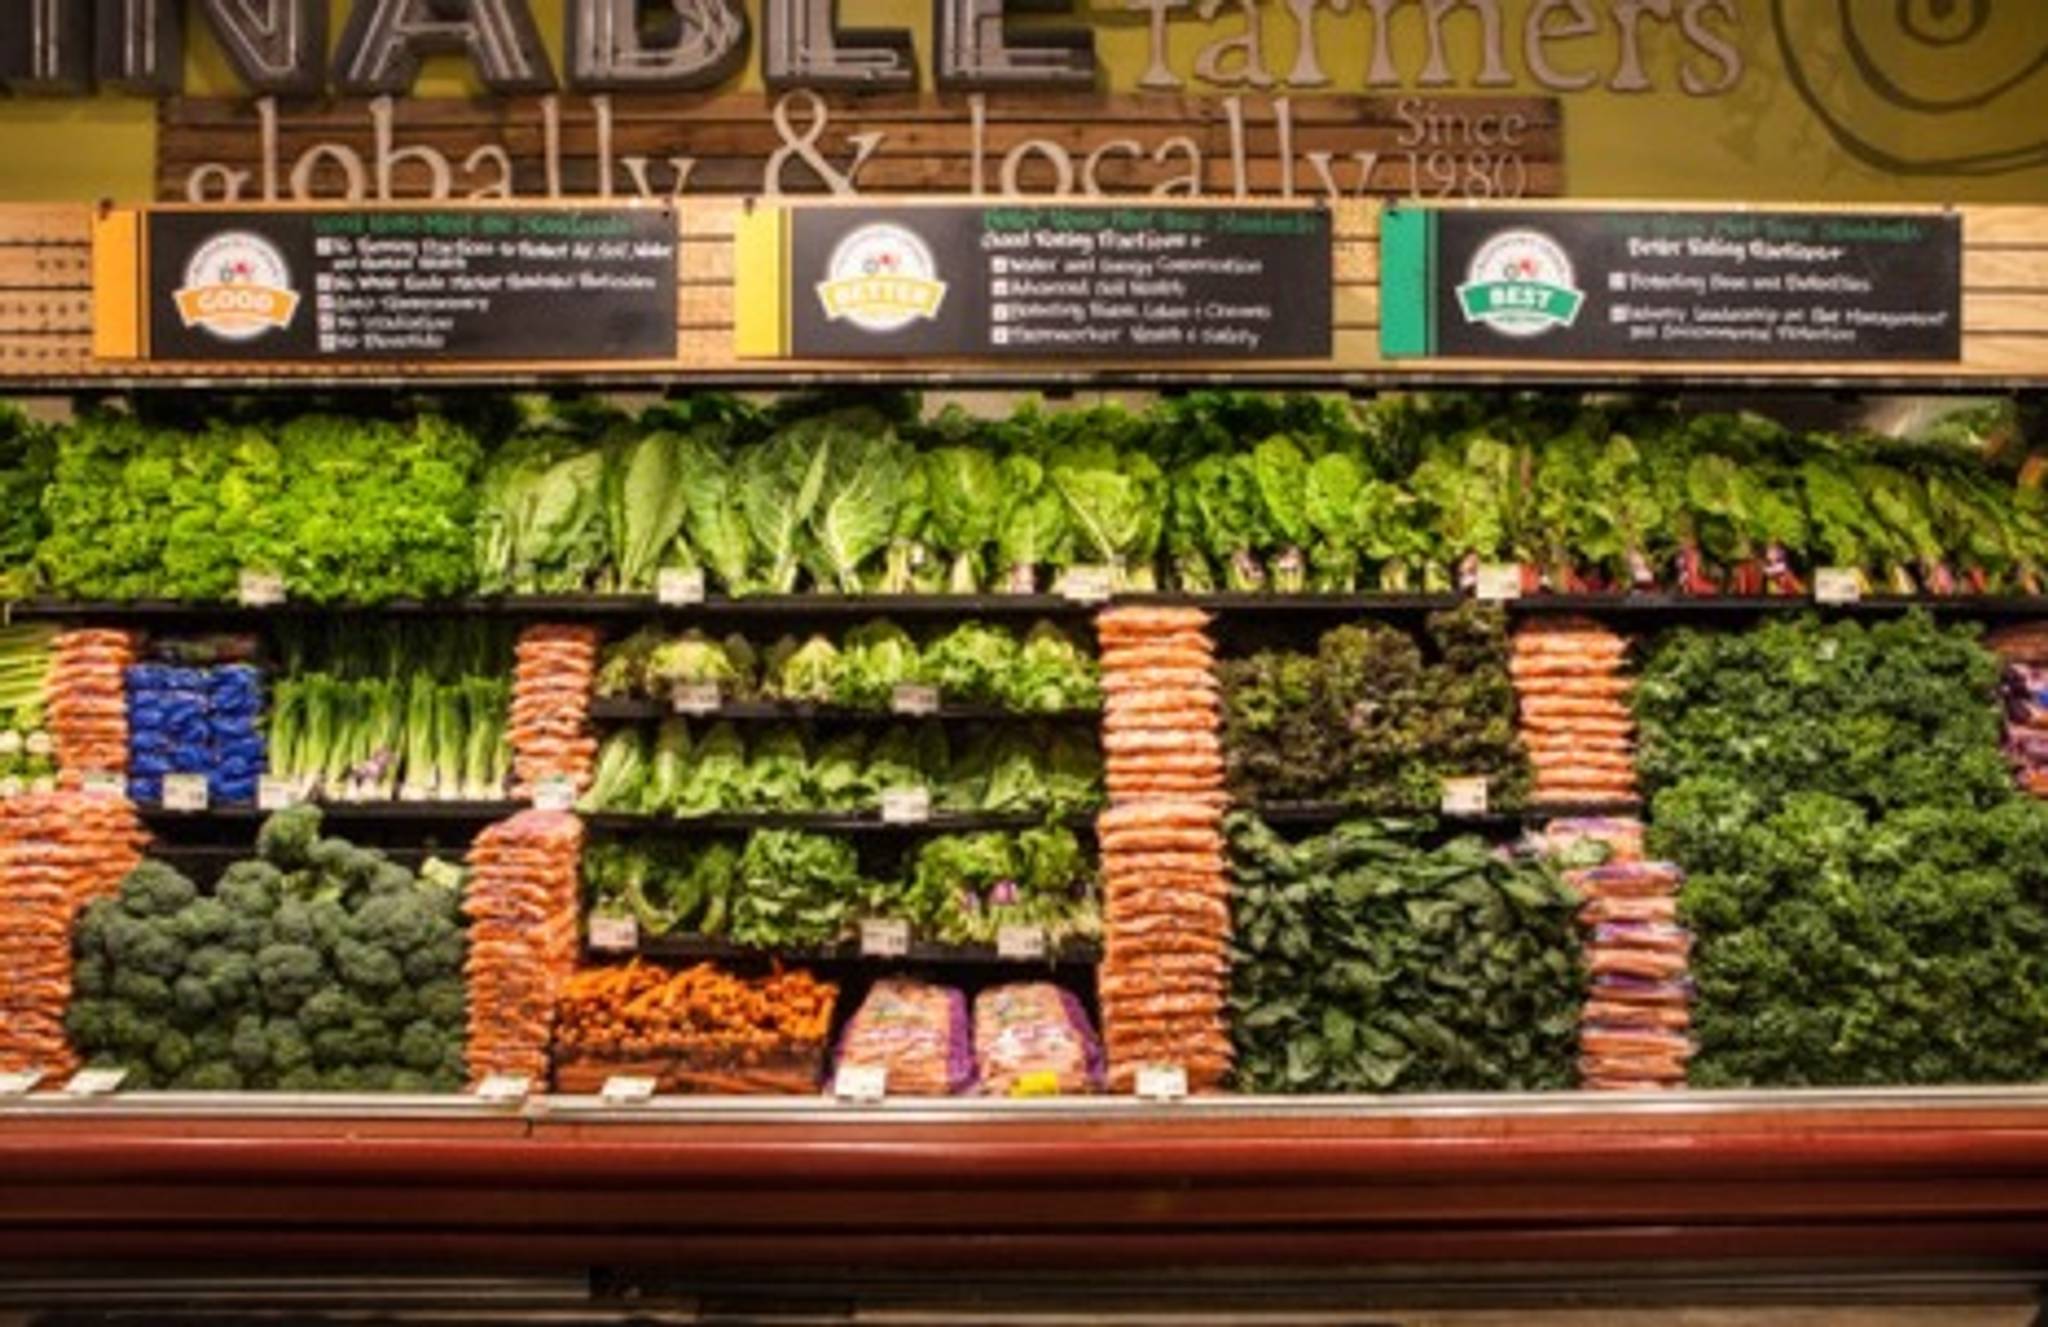 Whole Foods measures environmental impact